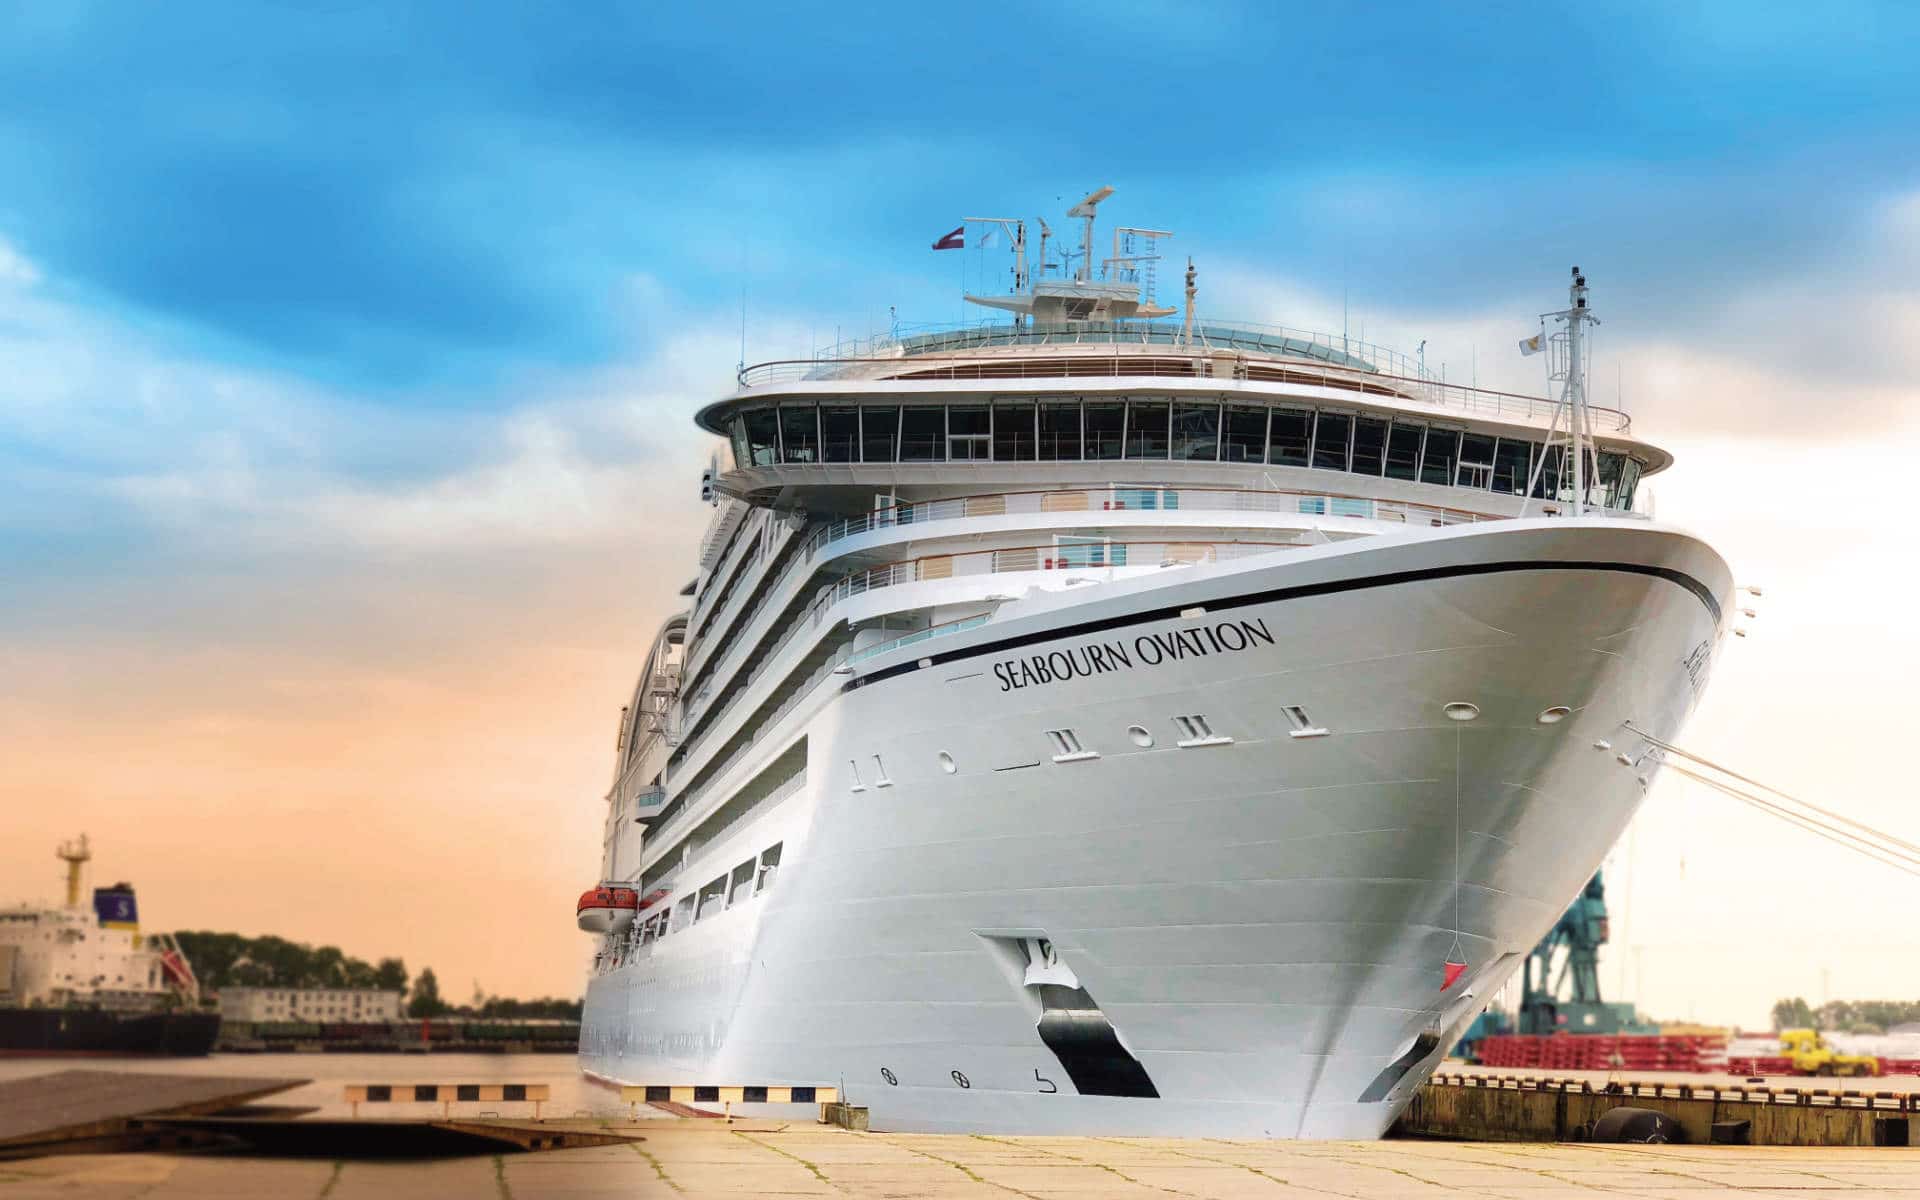 Seabourn Ovation cruise ship.